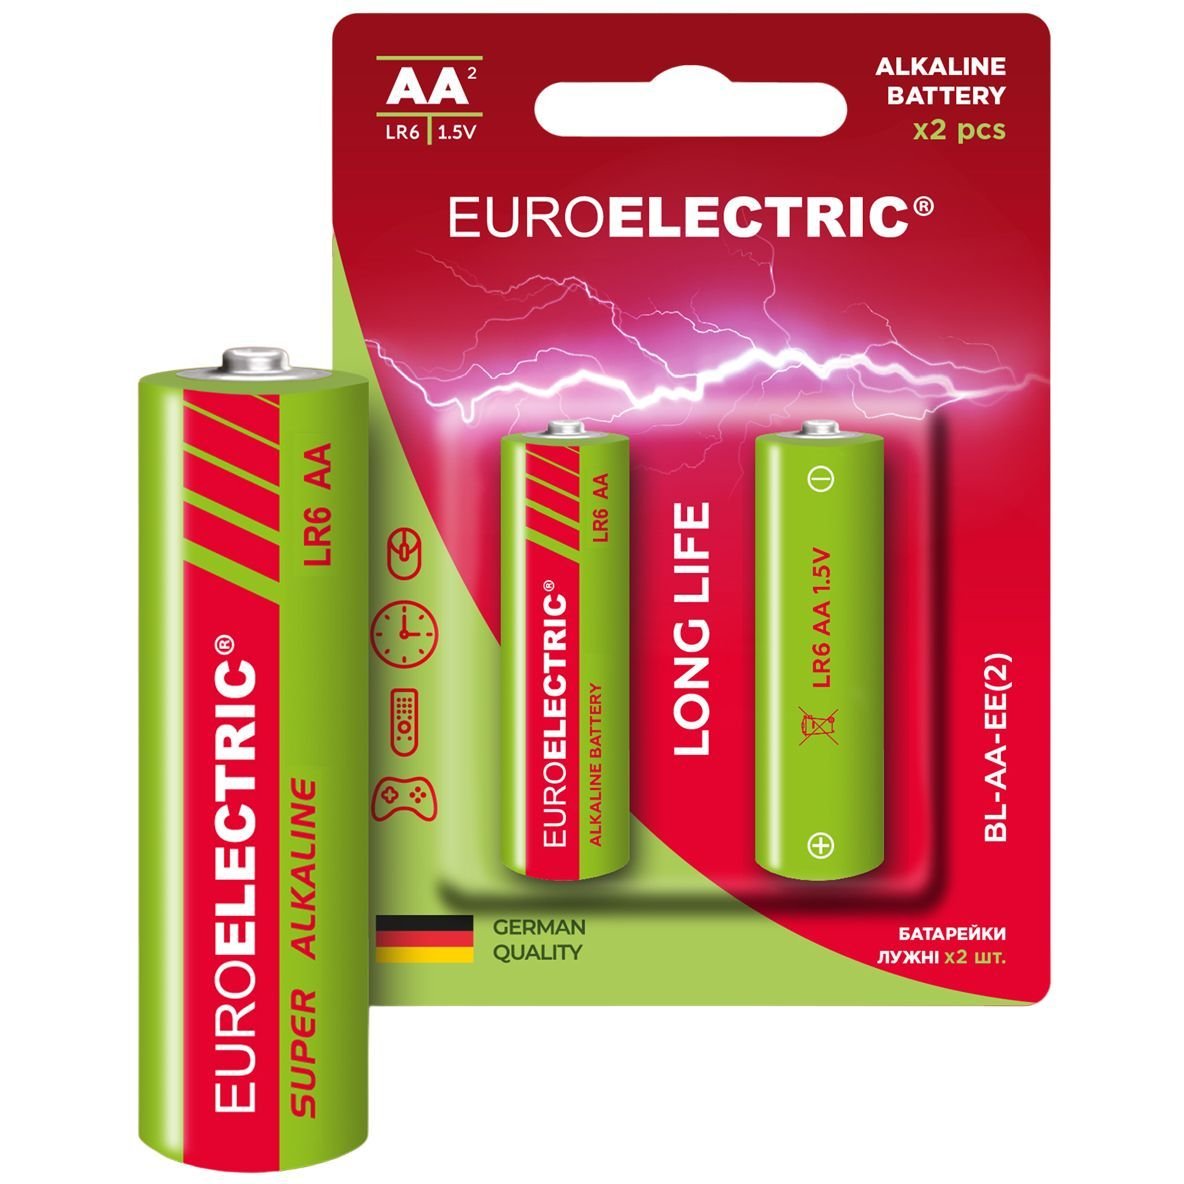 Батарейки Euroelectric AA LR6 1,5V, 2 шт. - фото 1